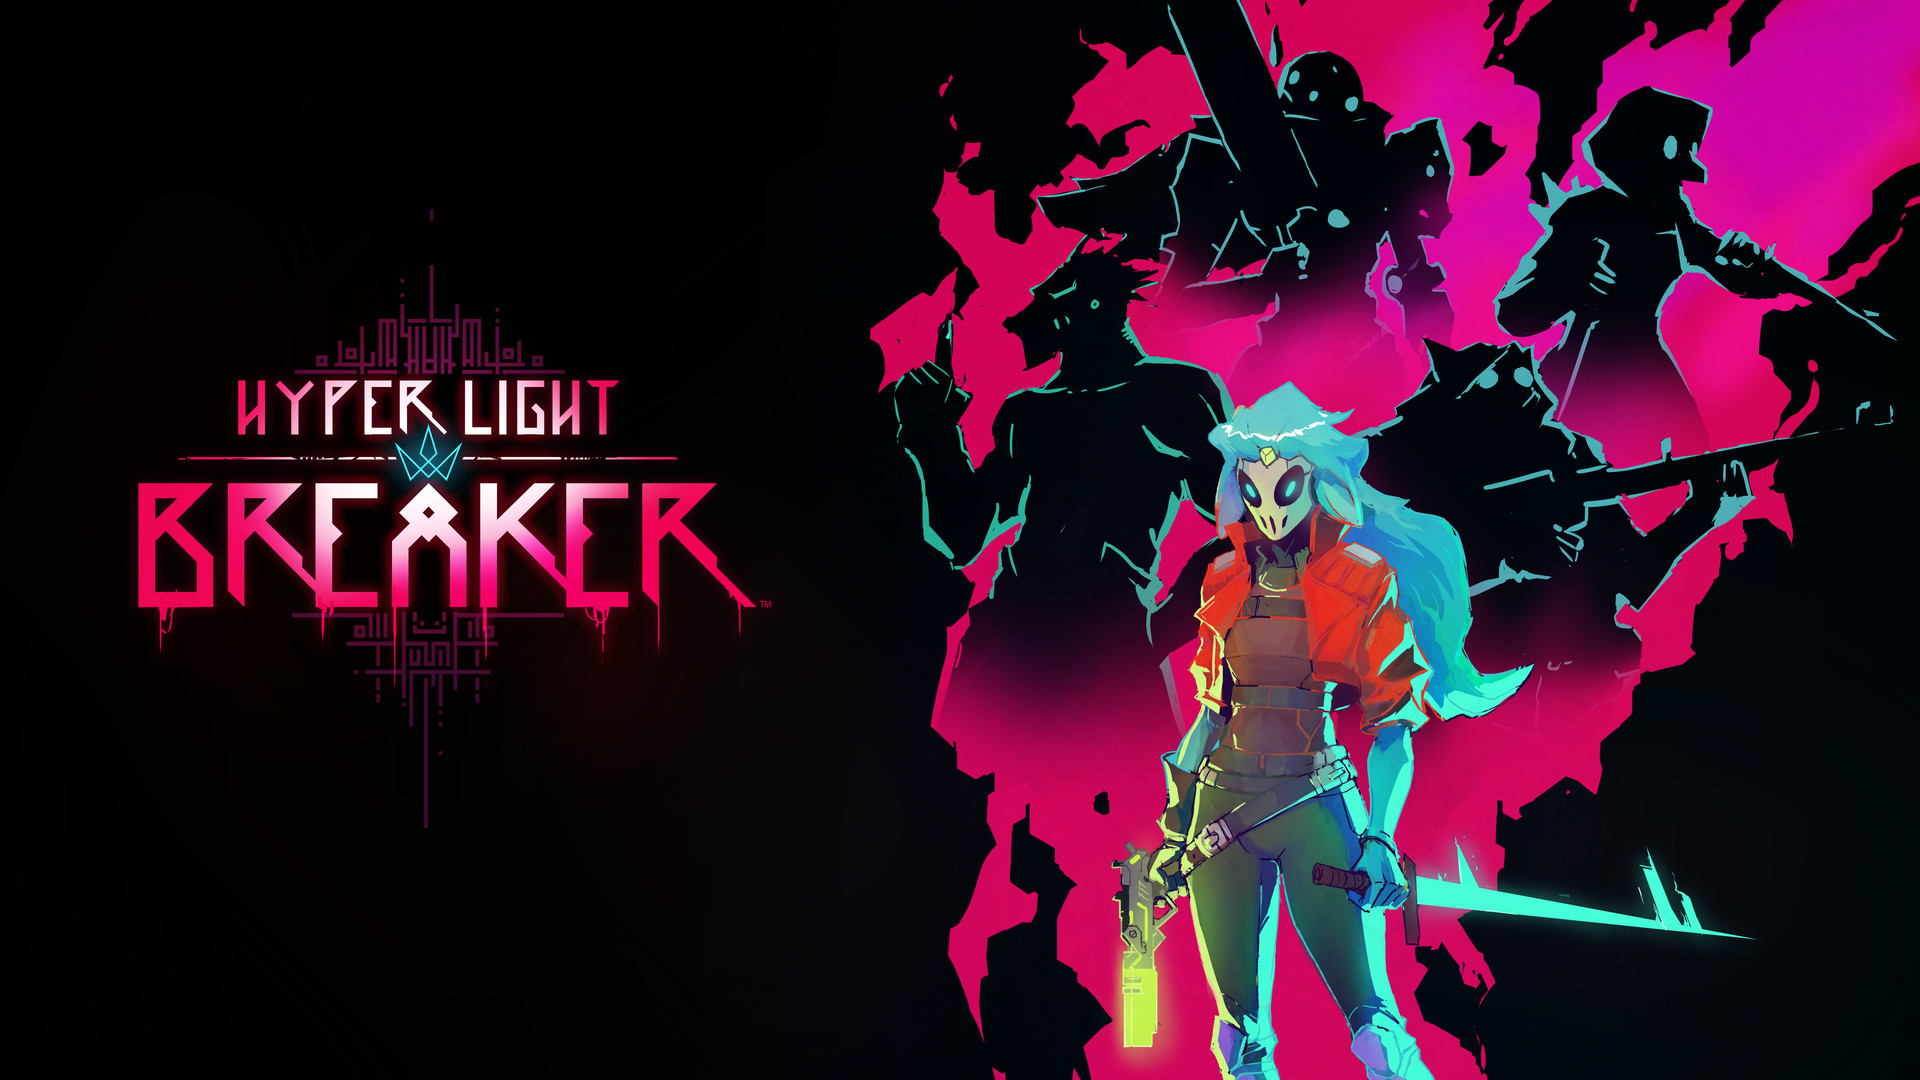 #Hyper Light Breaker: Der Nachfolger von Hyper Light Drifter geht in die dritte Dimension